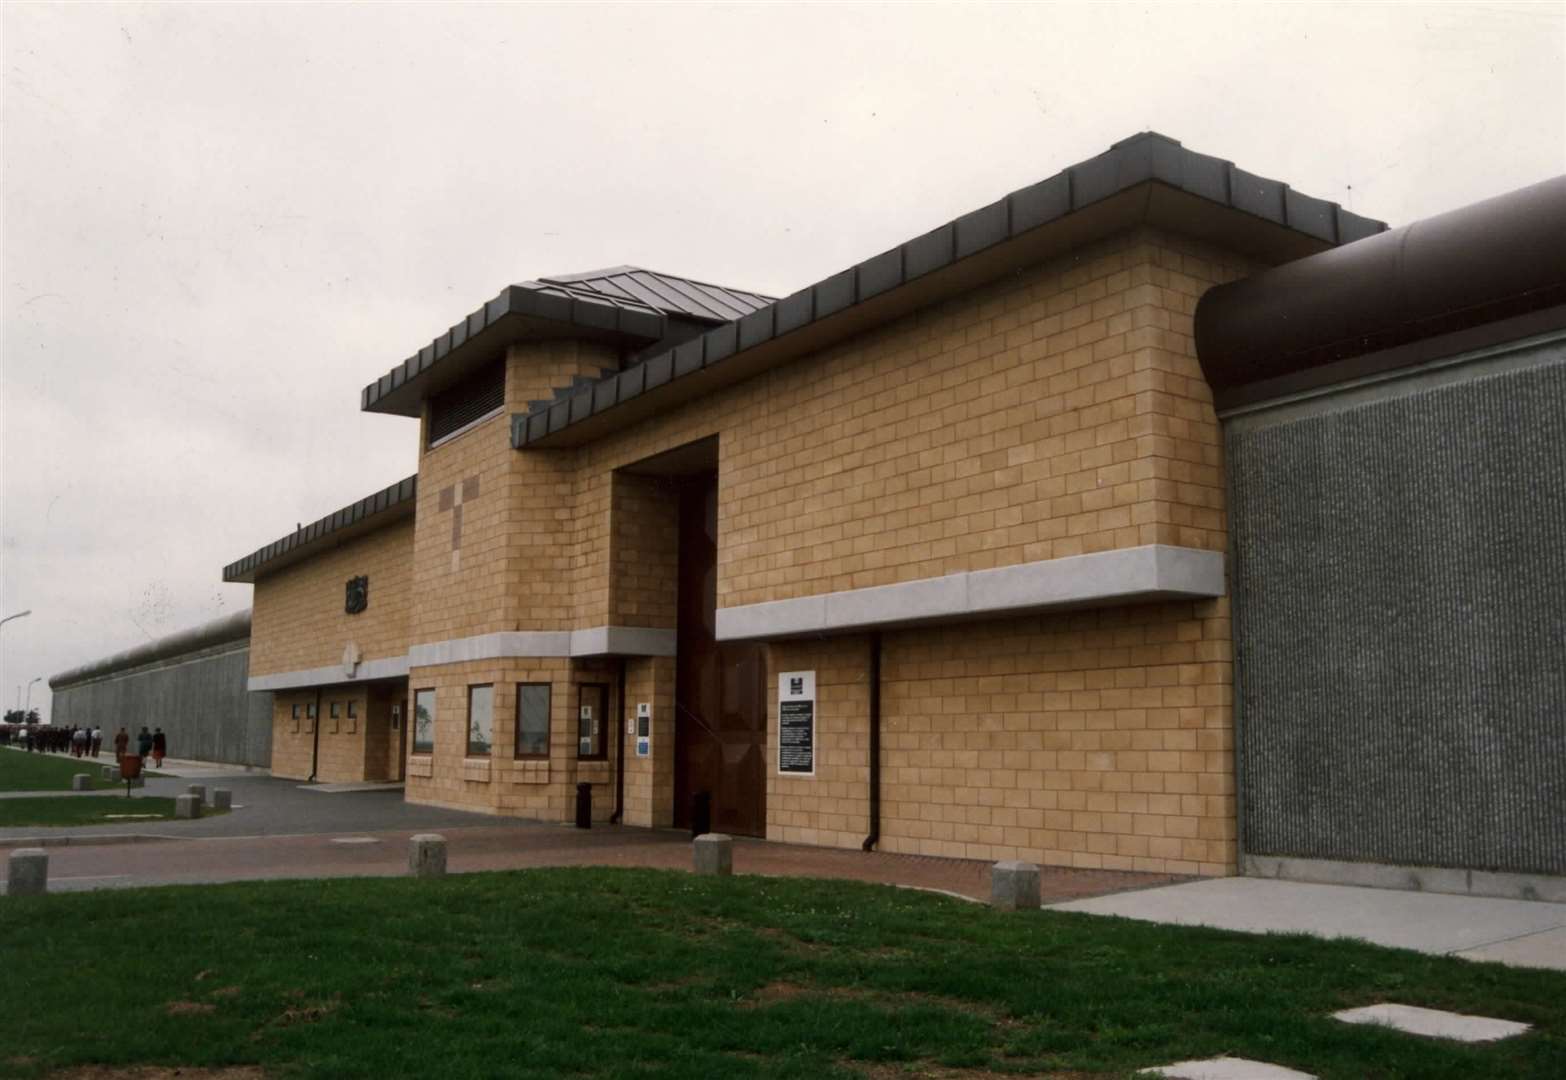 Elmley Prison, Eastchurch - Isle of Sheppey